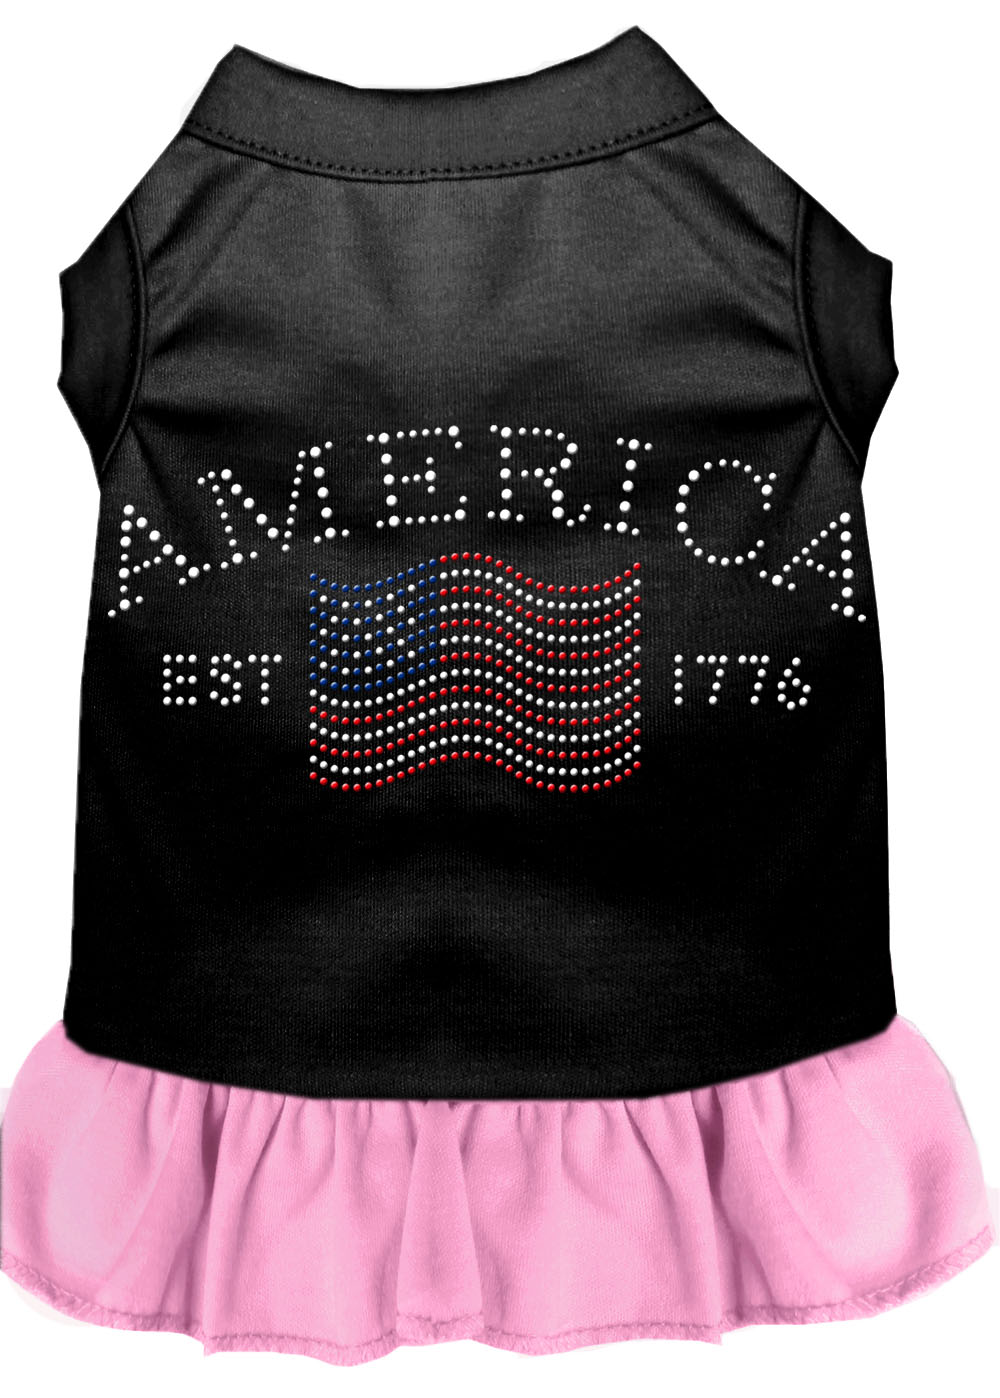 Classic America Rhinestone Dress Black with Light Pink XXXL